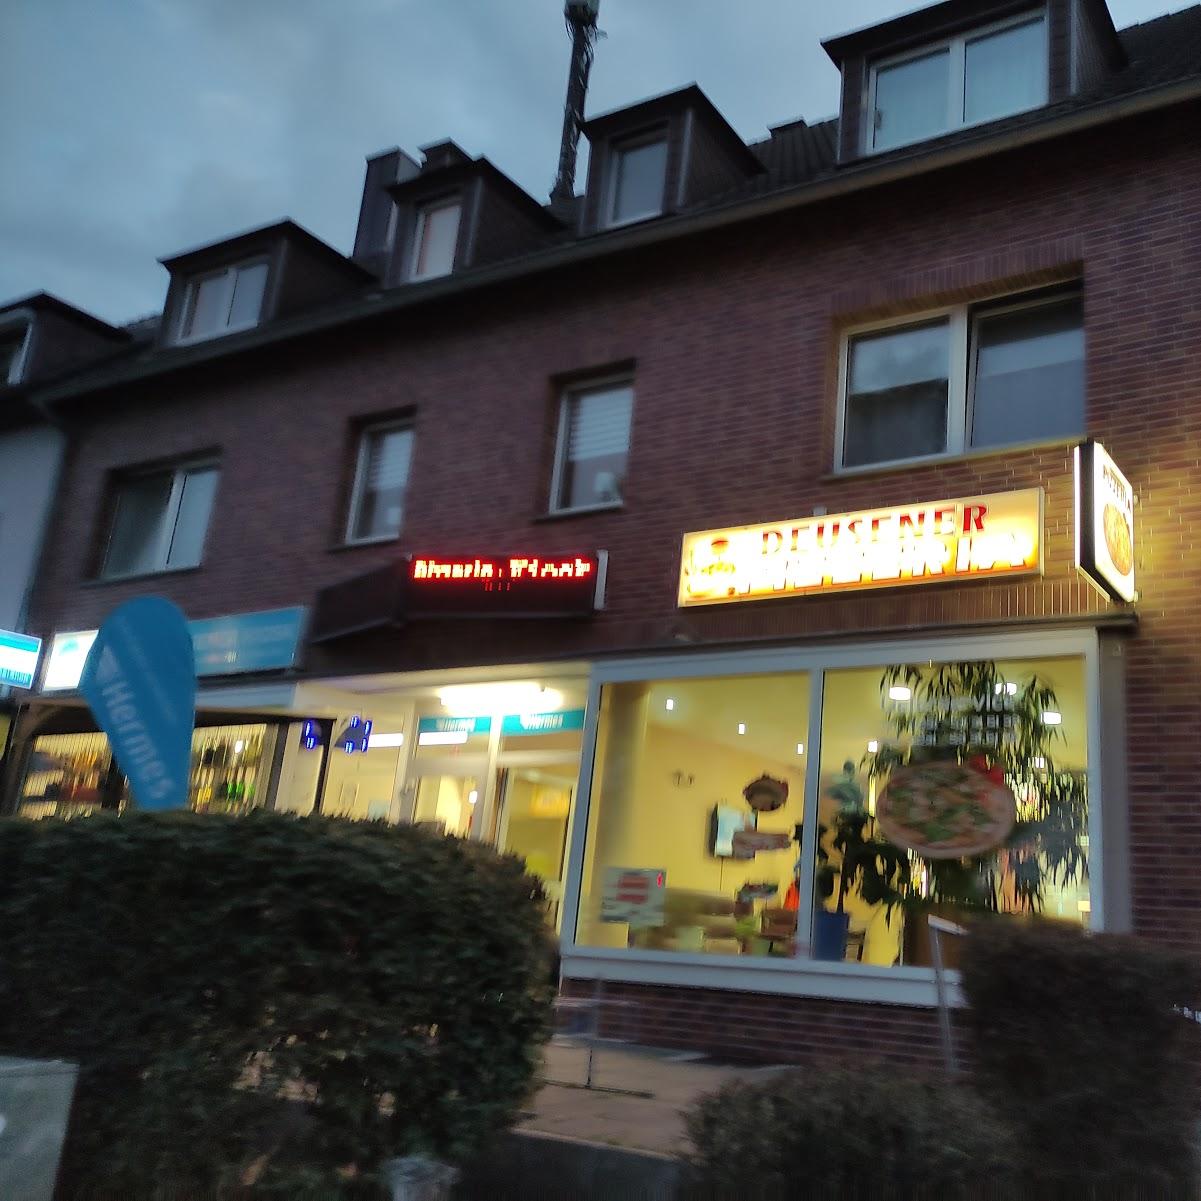 Restaurant "Deusener Pizzeria" in Dortmund